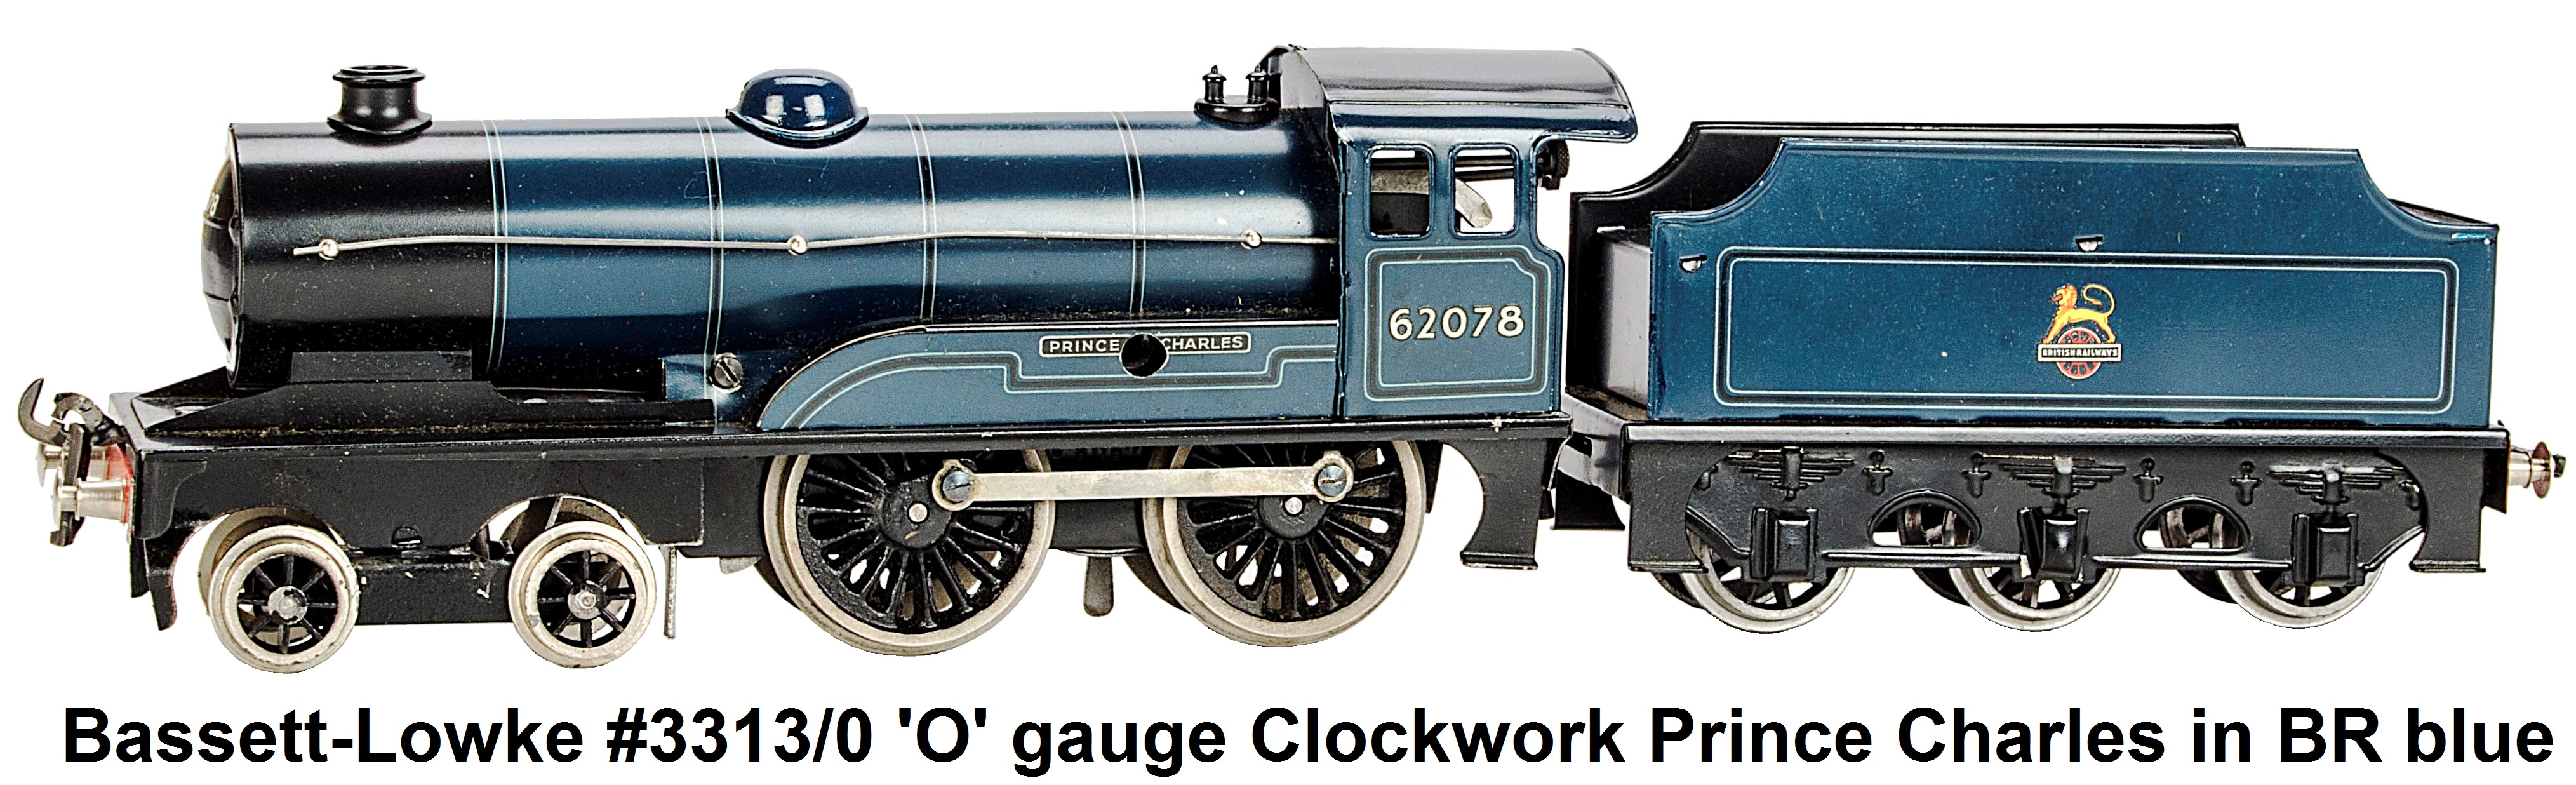 Bassett-Lowke Catalog #3313/0 'O' gauge clockwork 'Prince Charles' Locomotive and Tender in British Rail blue